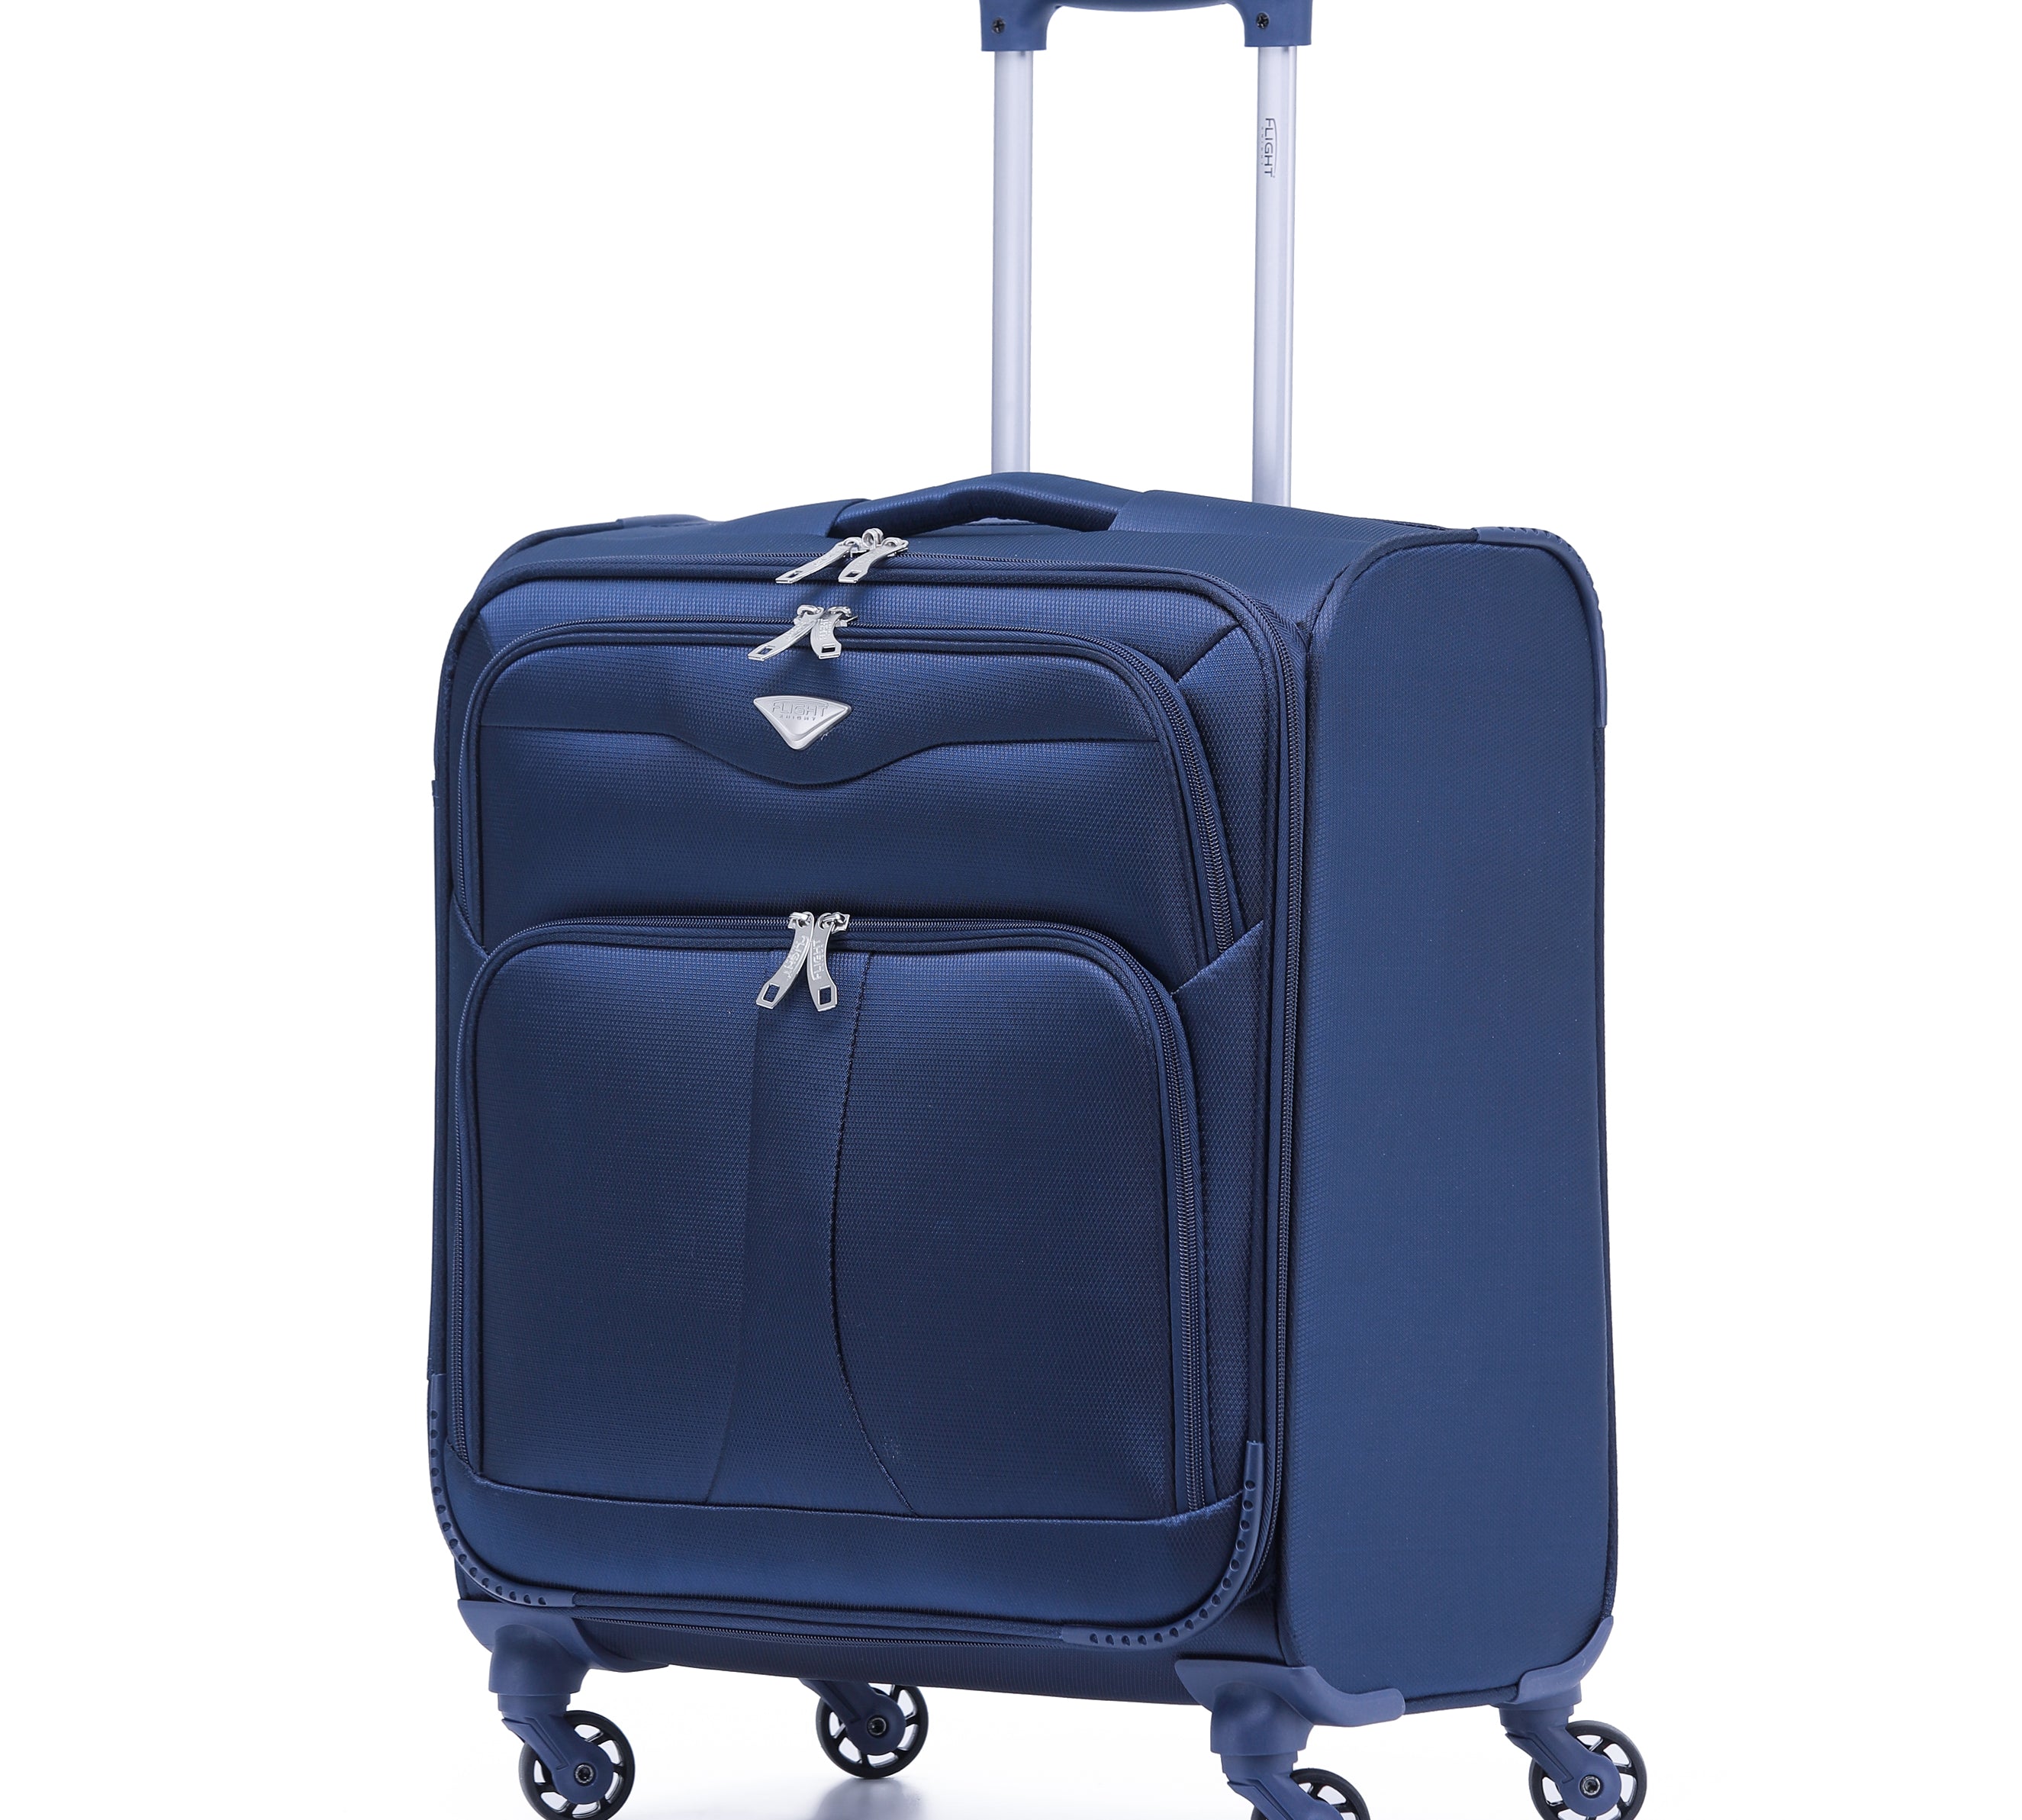 56x45x25cm Soft Shell Cabin Case BA & EasyJet Maximum Carry on suitcase size